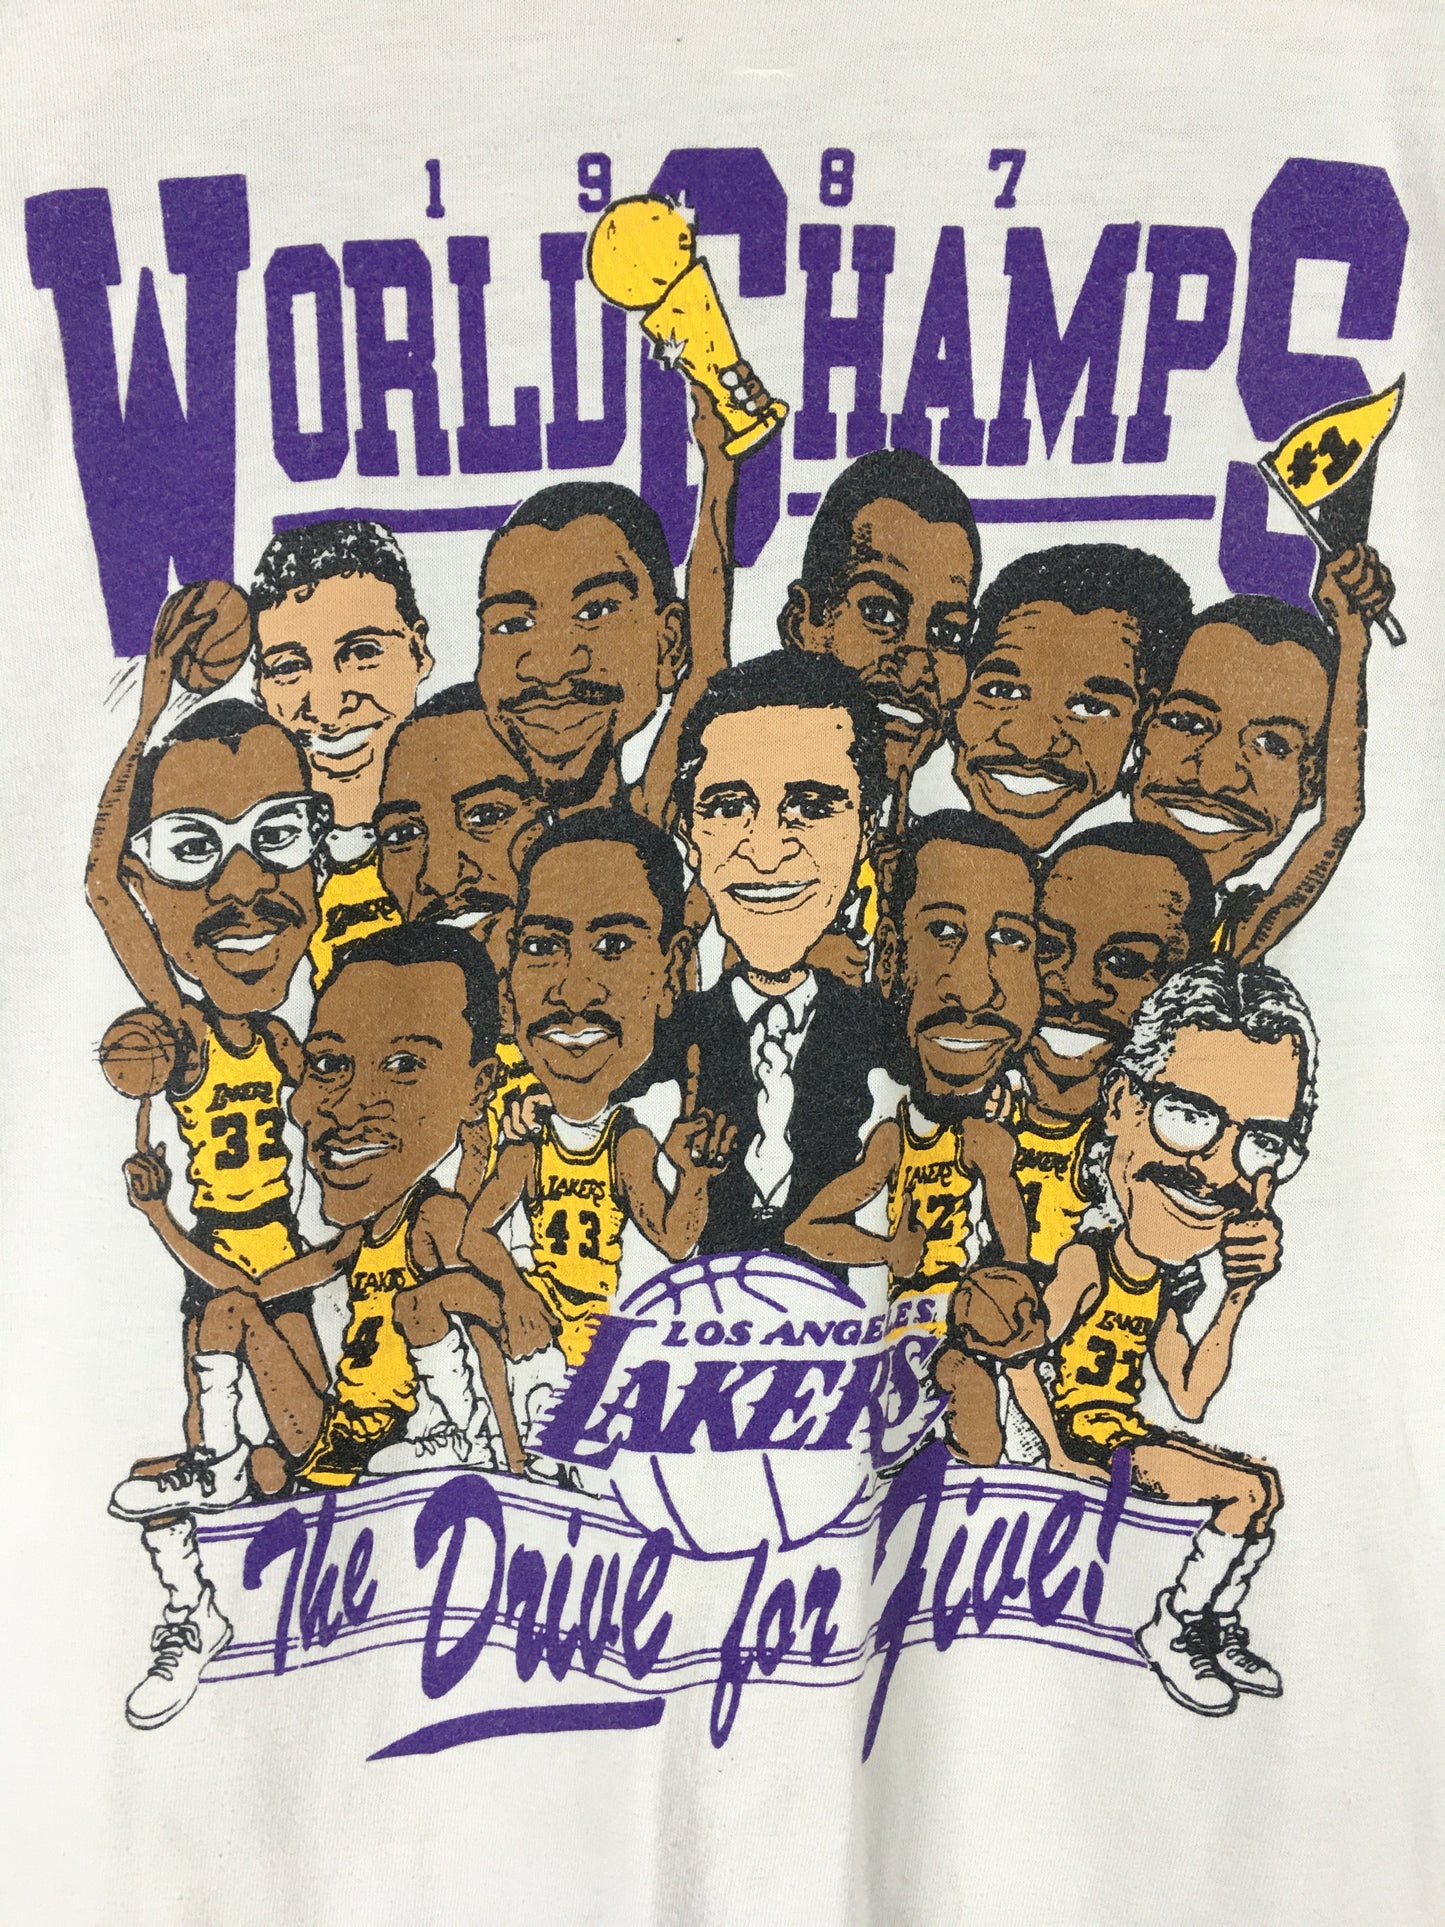 Vintage LA Lakers NBA World Champions 1987 Caricature T-shirt